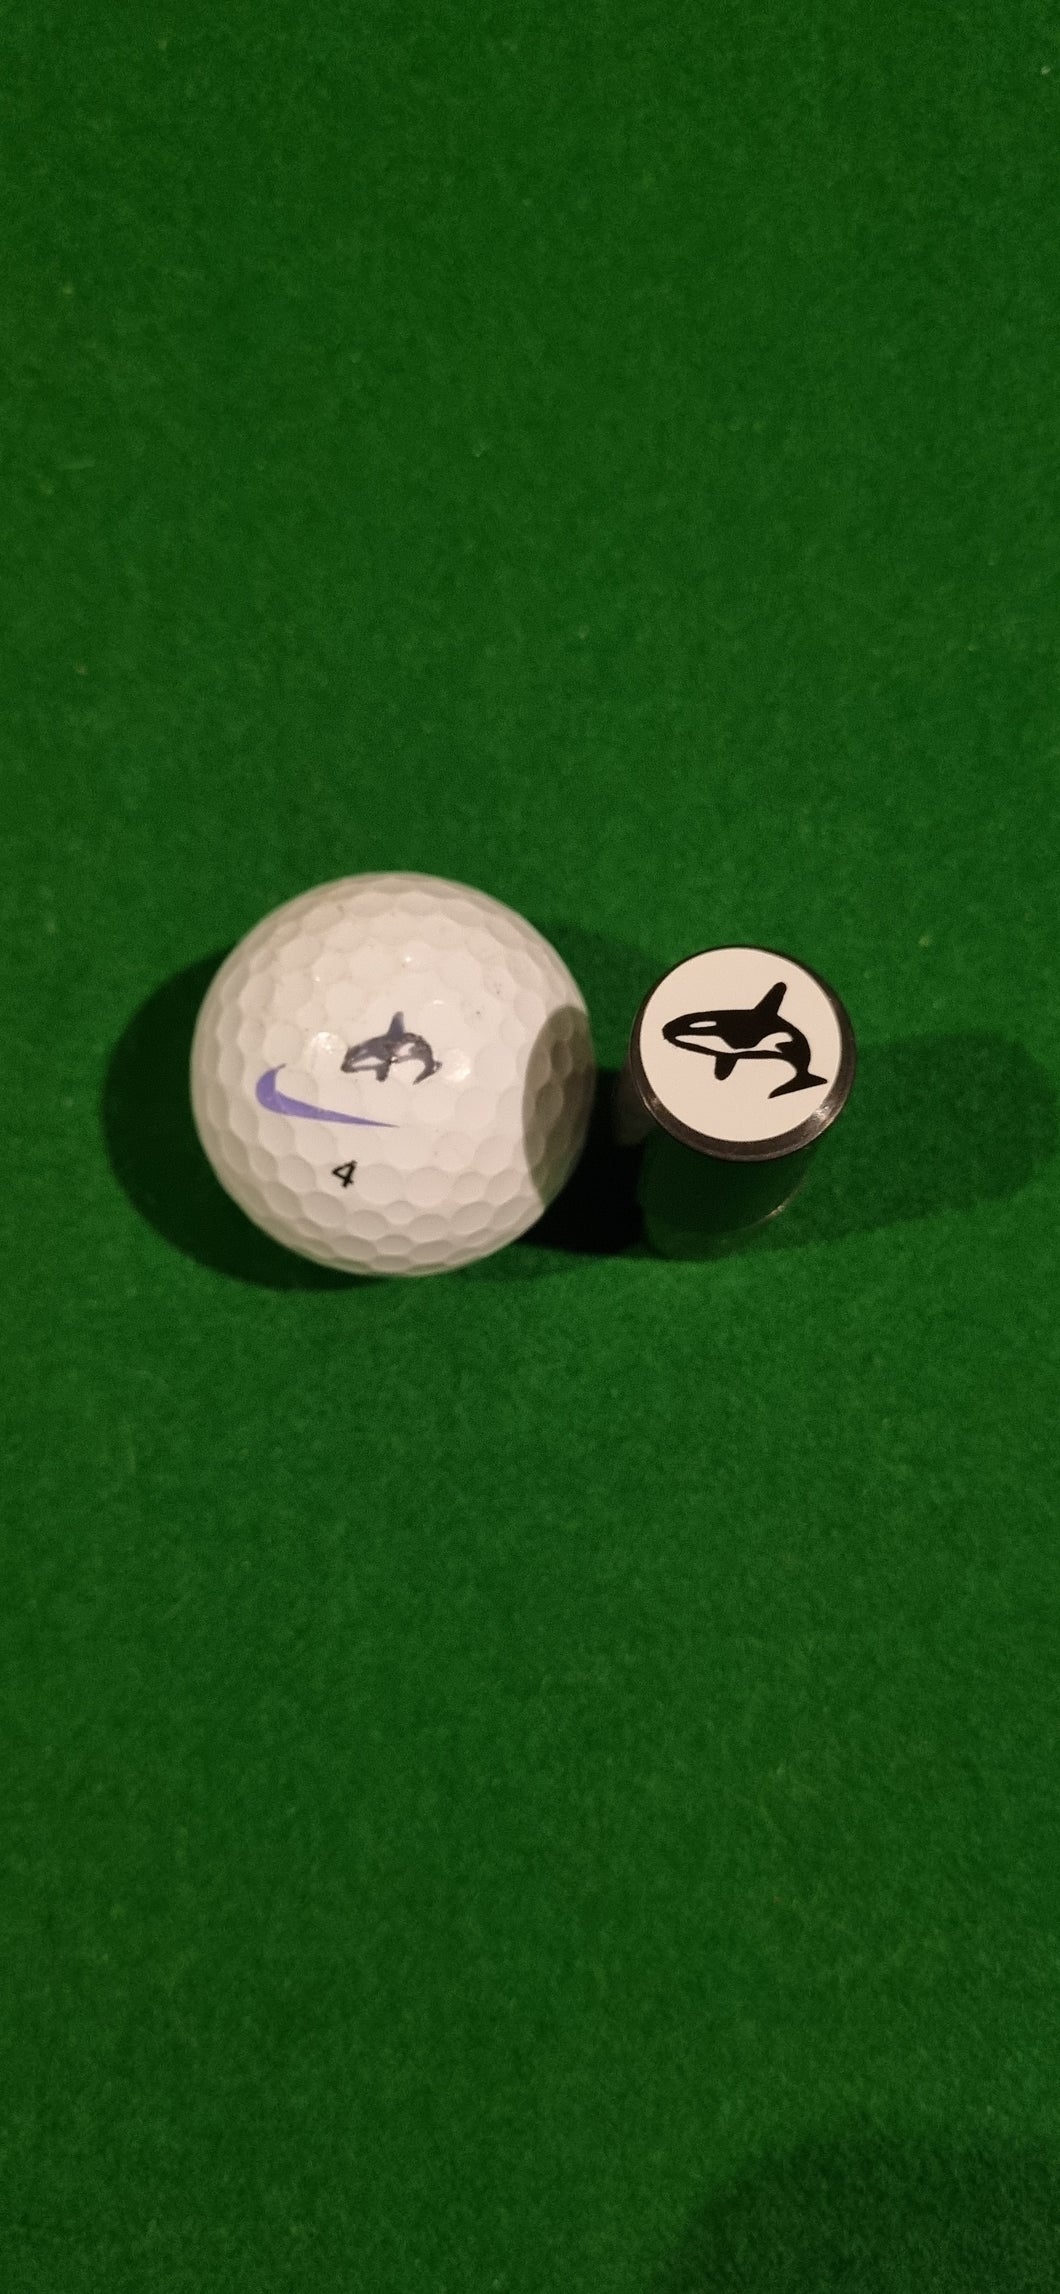 Golf Ball Stamp Marker - Shark - New